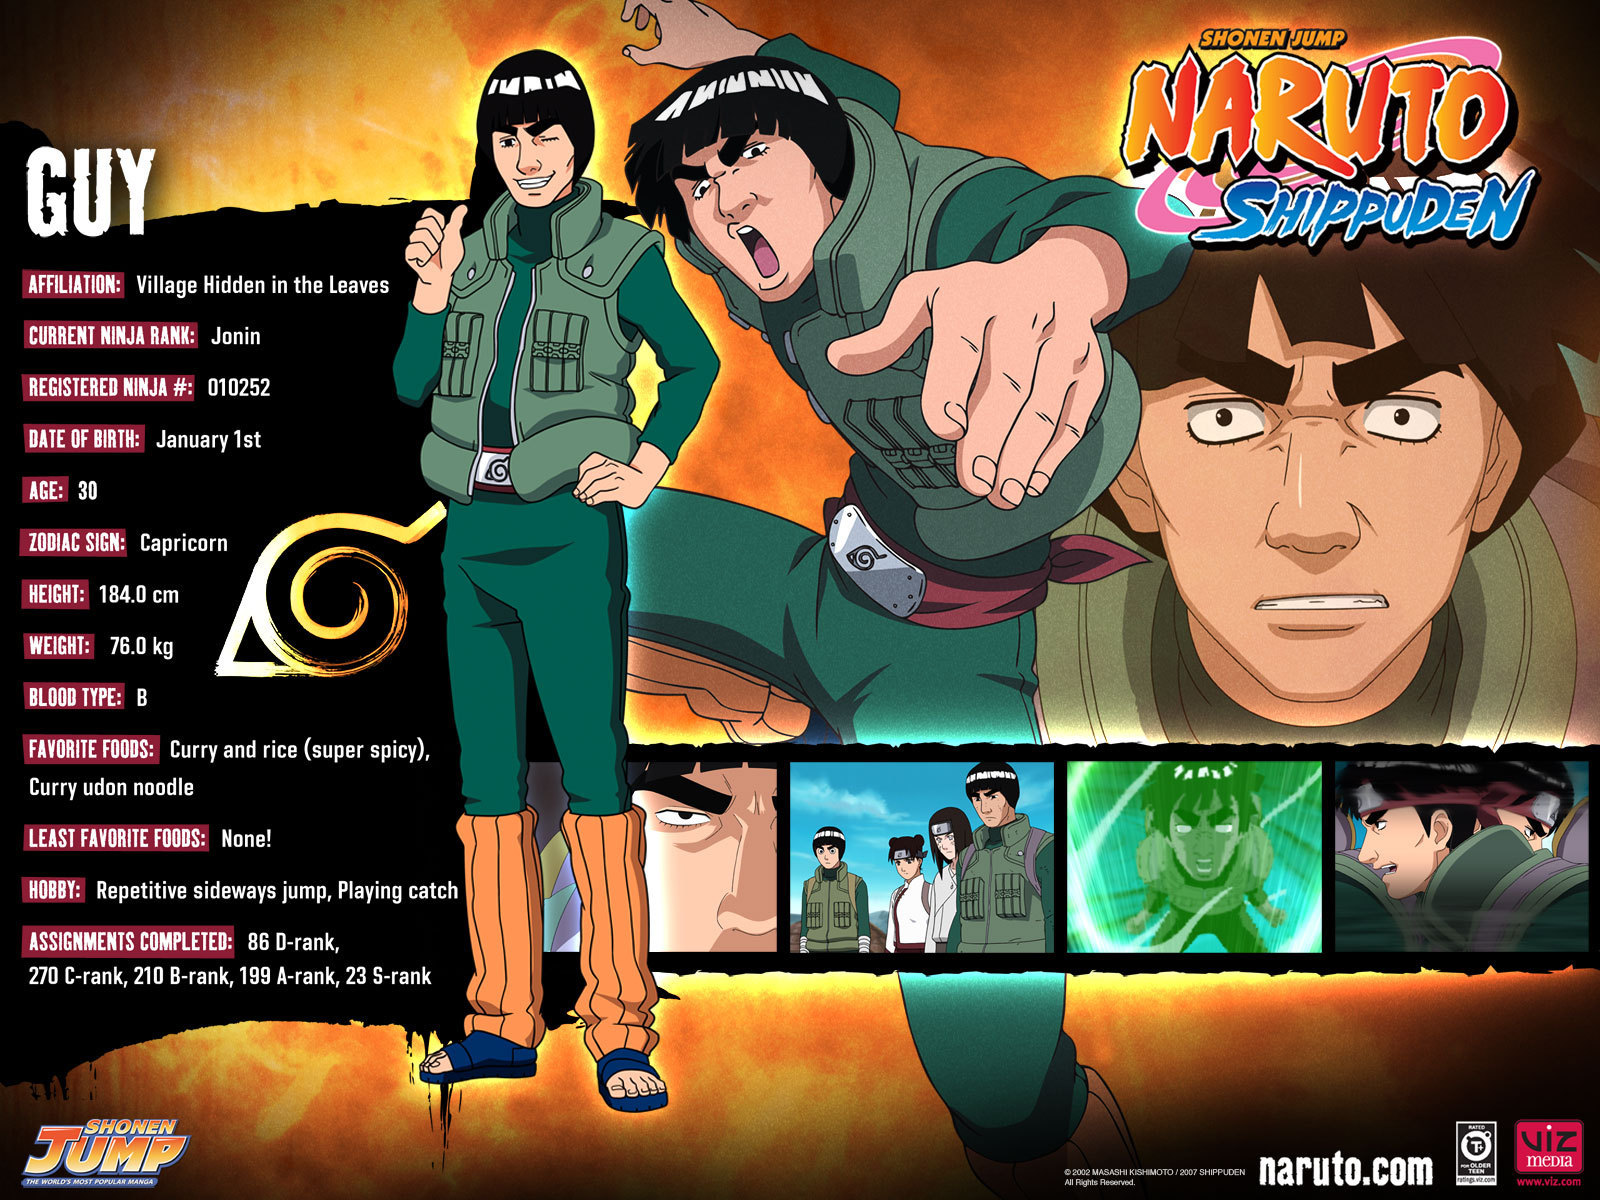 Papersonal Naruto Hd Wallpaper 1080p Images, Photos, Reviews